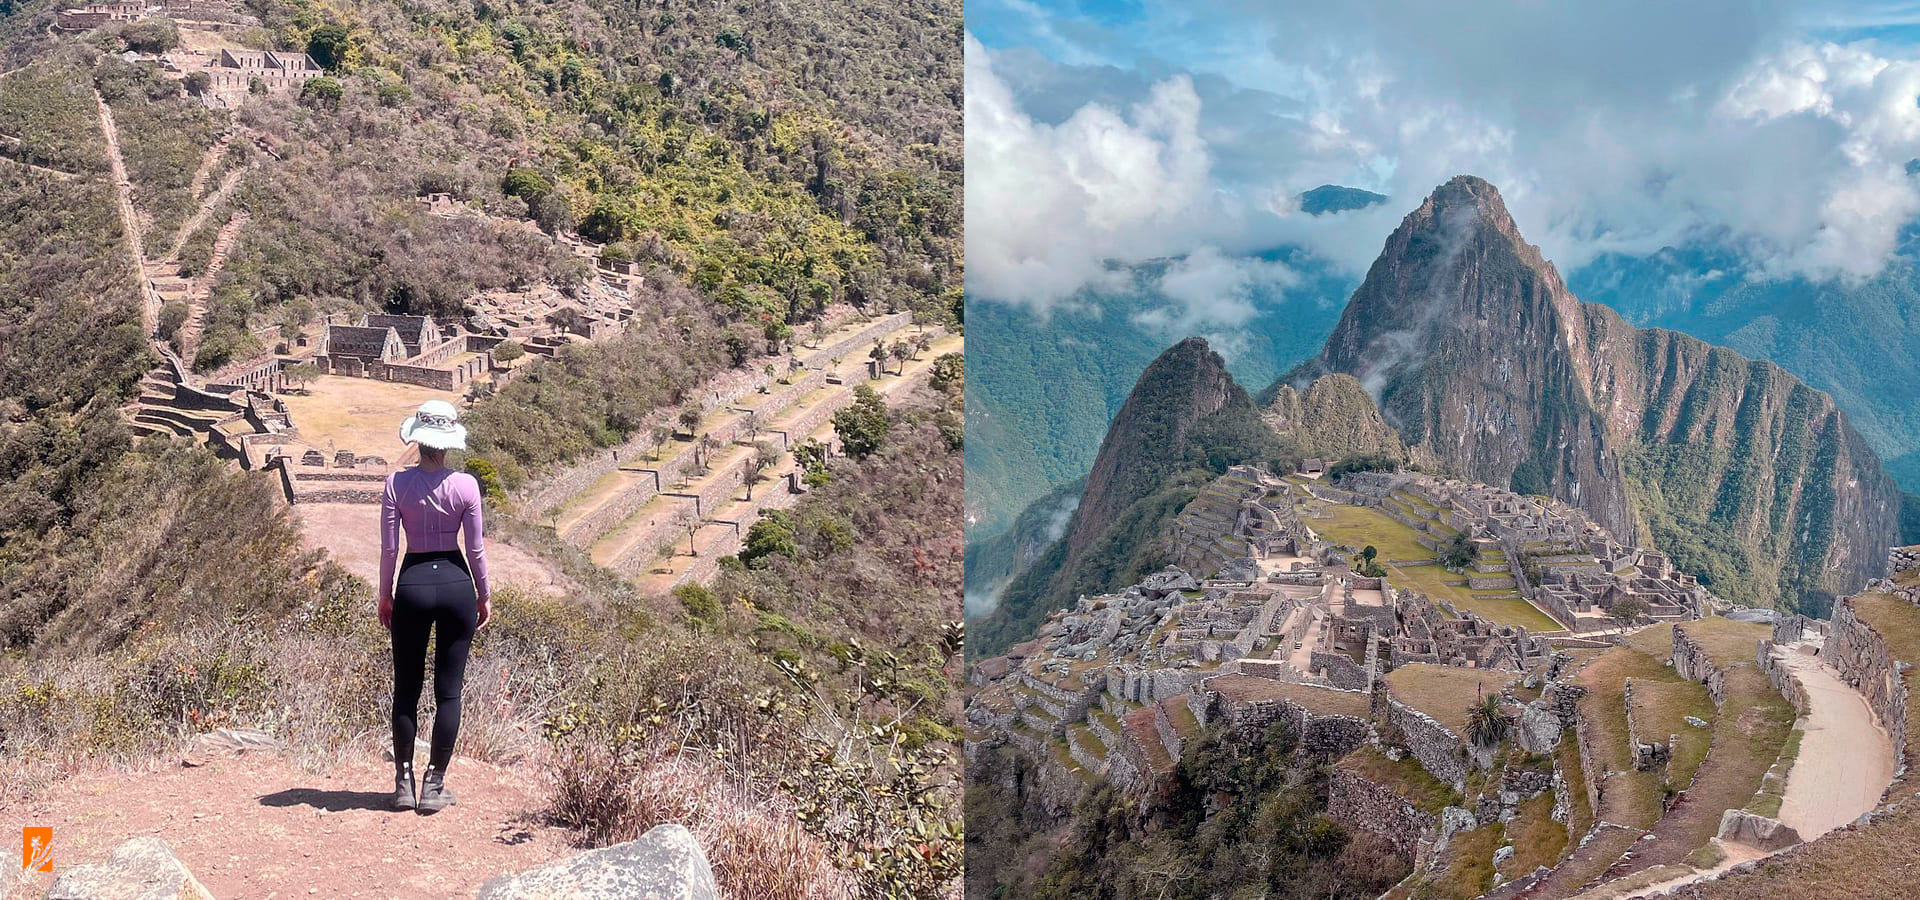 Travel Tips for Choquequirao: Machu Picchu